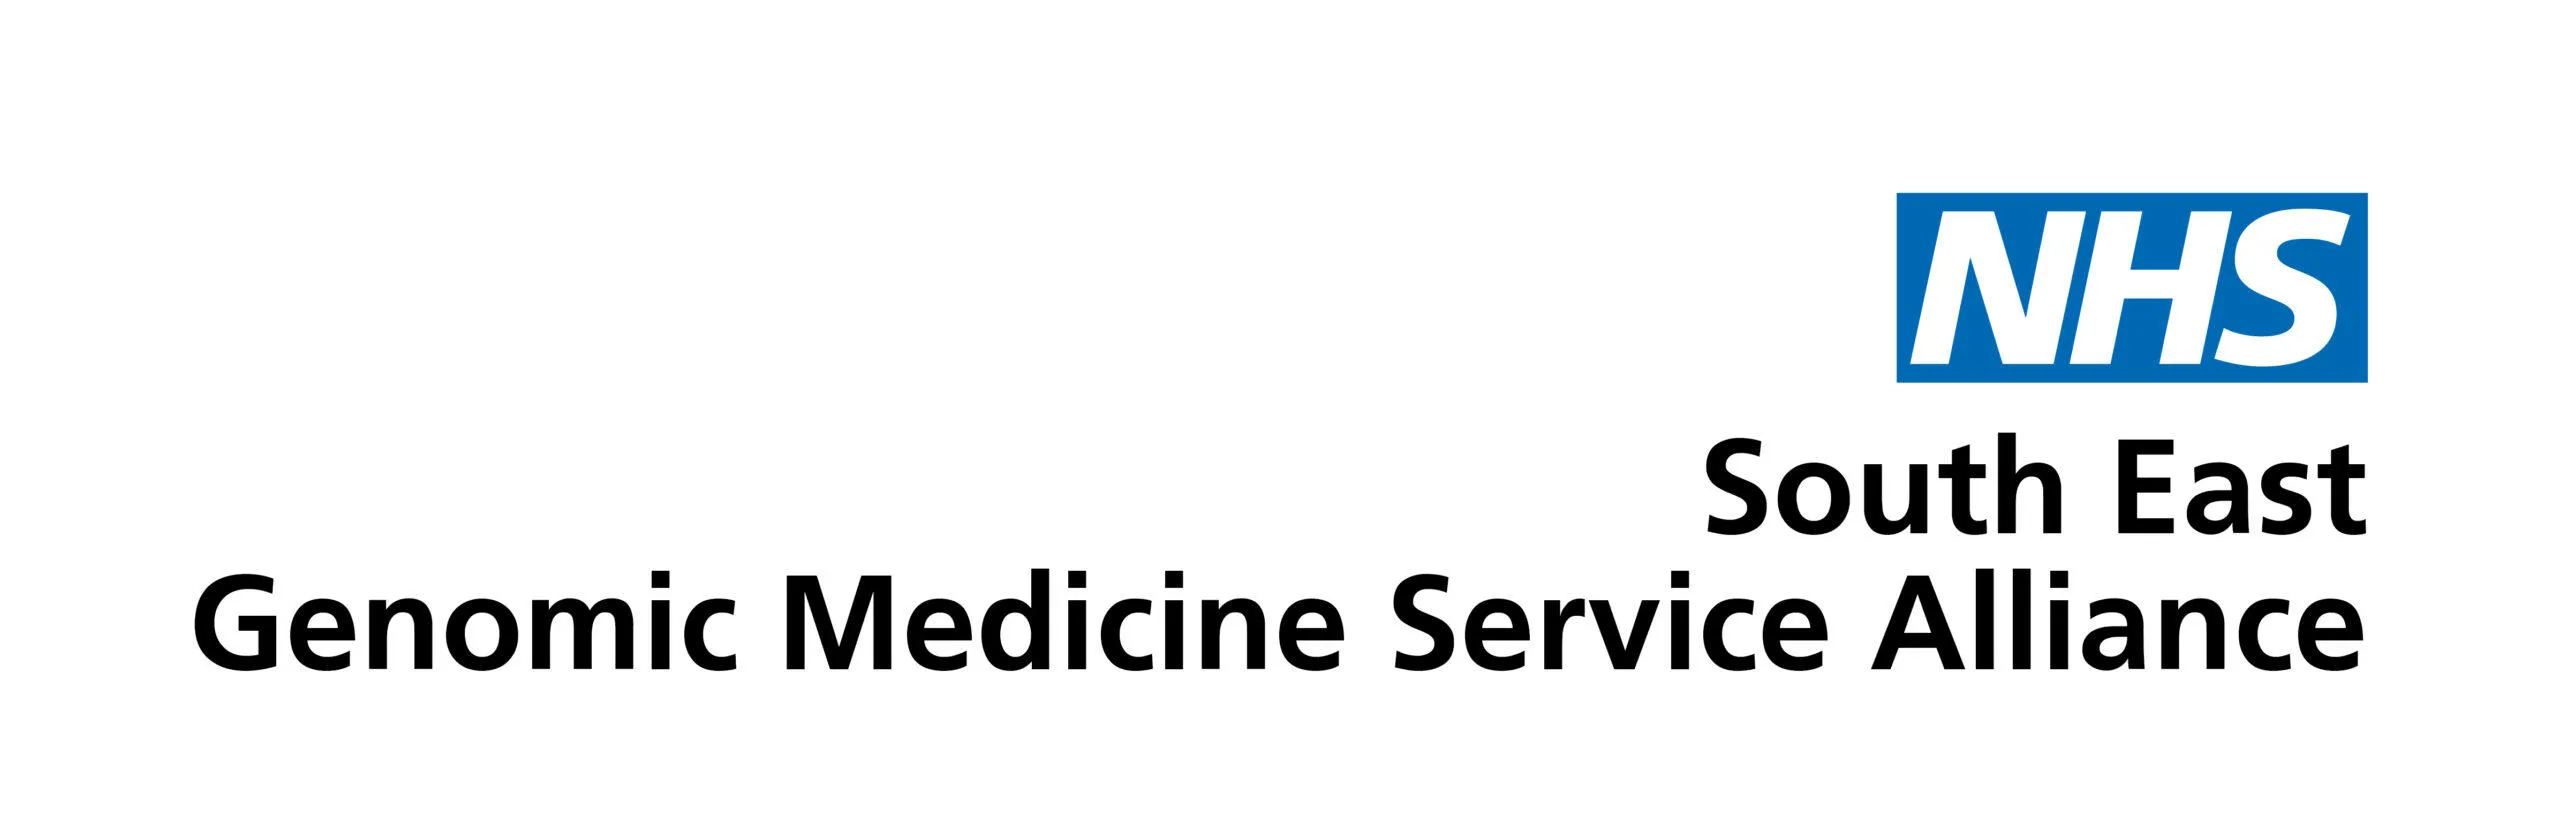 NHS South East Genomic Medicine Service Alliances (GMSA) logo